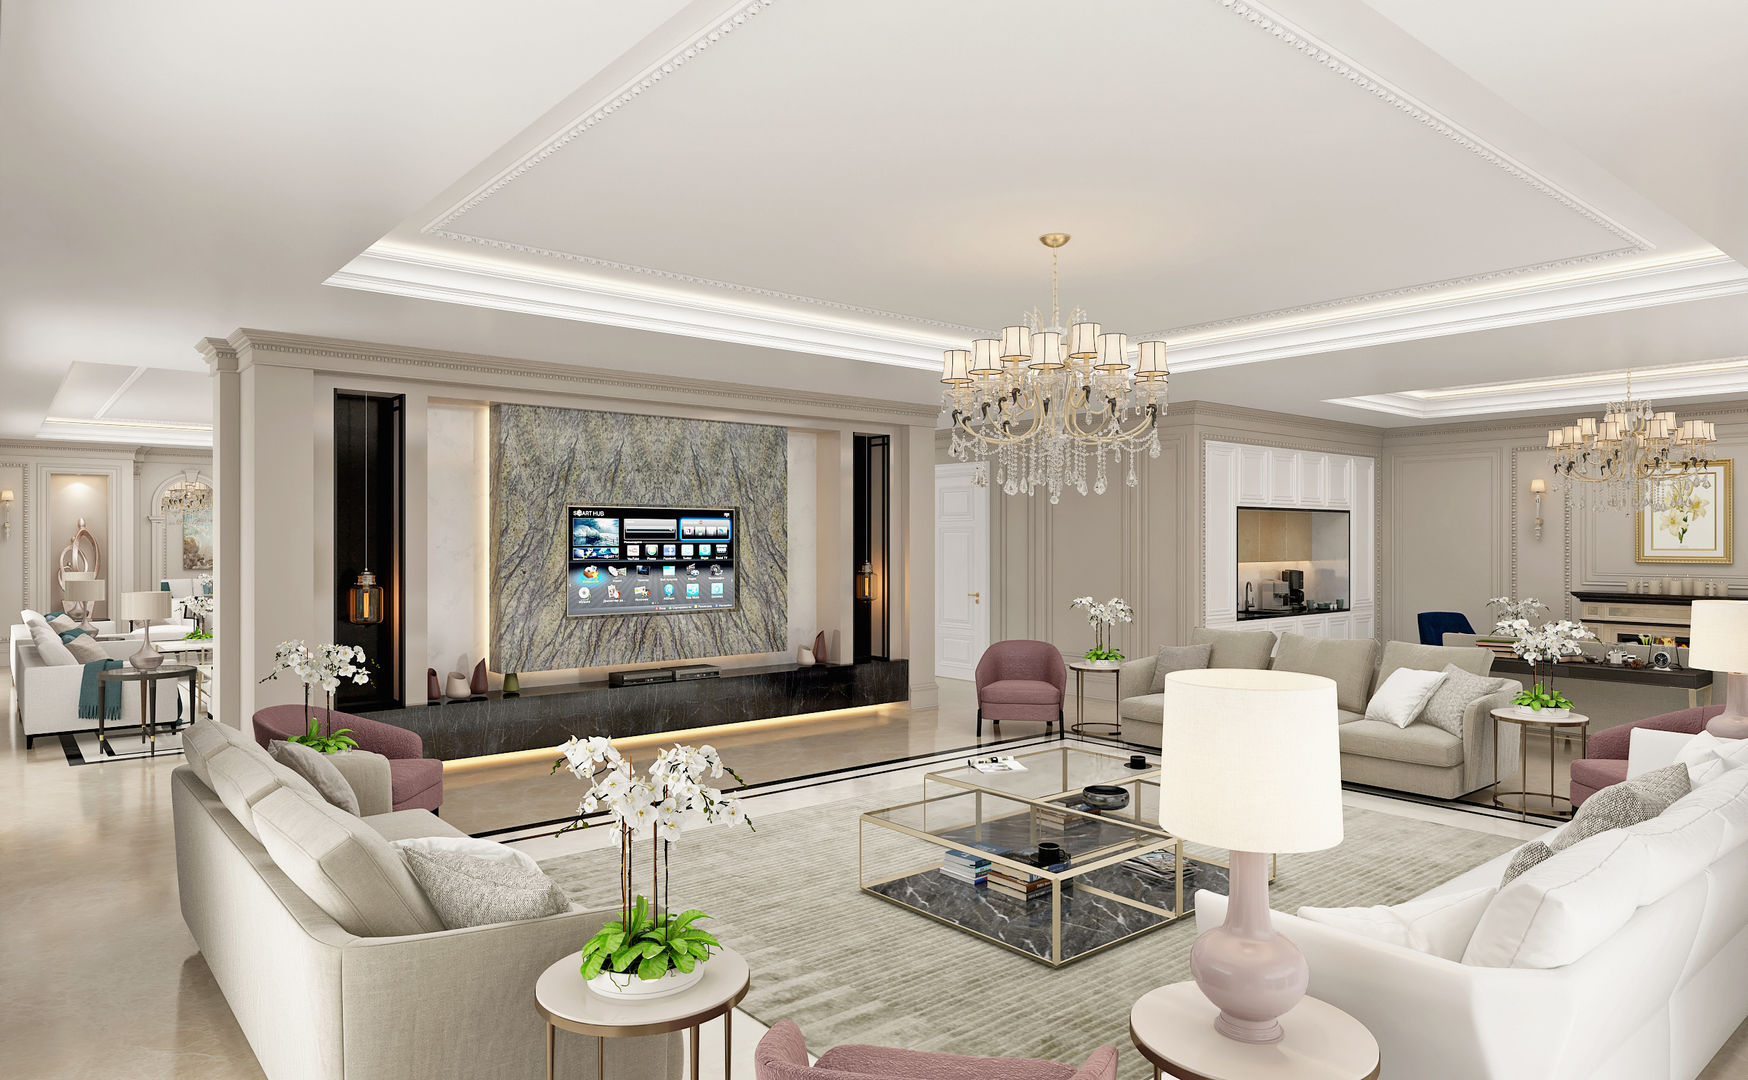 Living Room Sia Moore Archıtecture Interıor Desıgn Salon classique